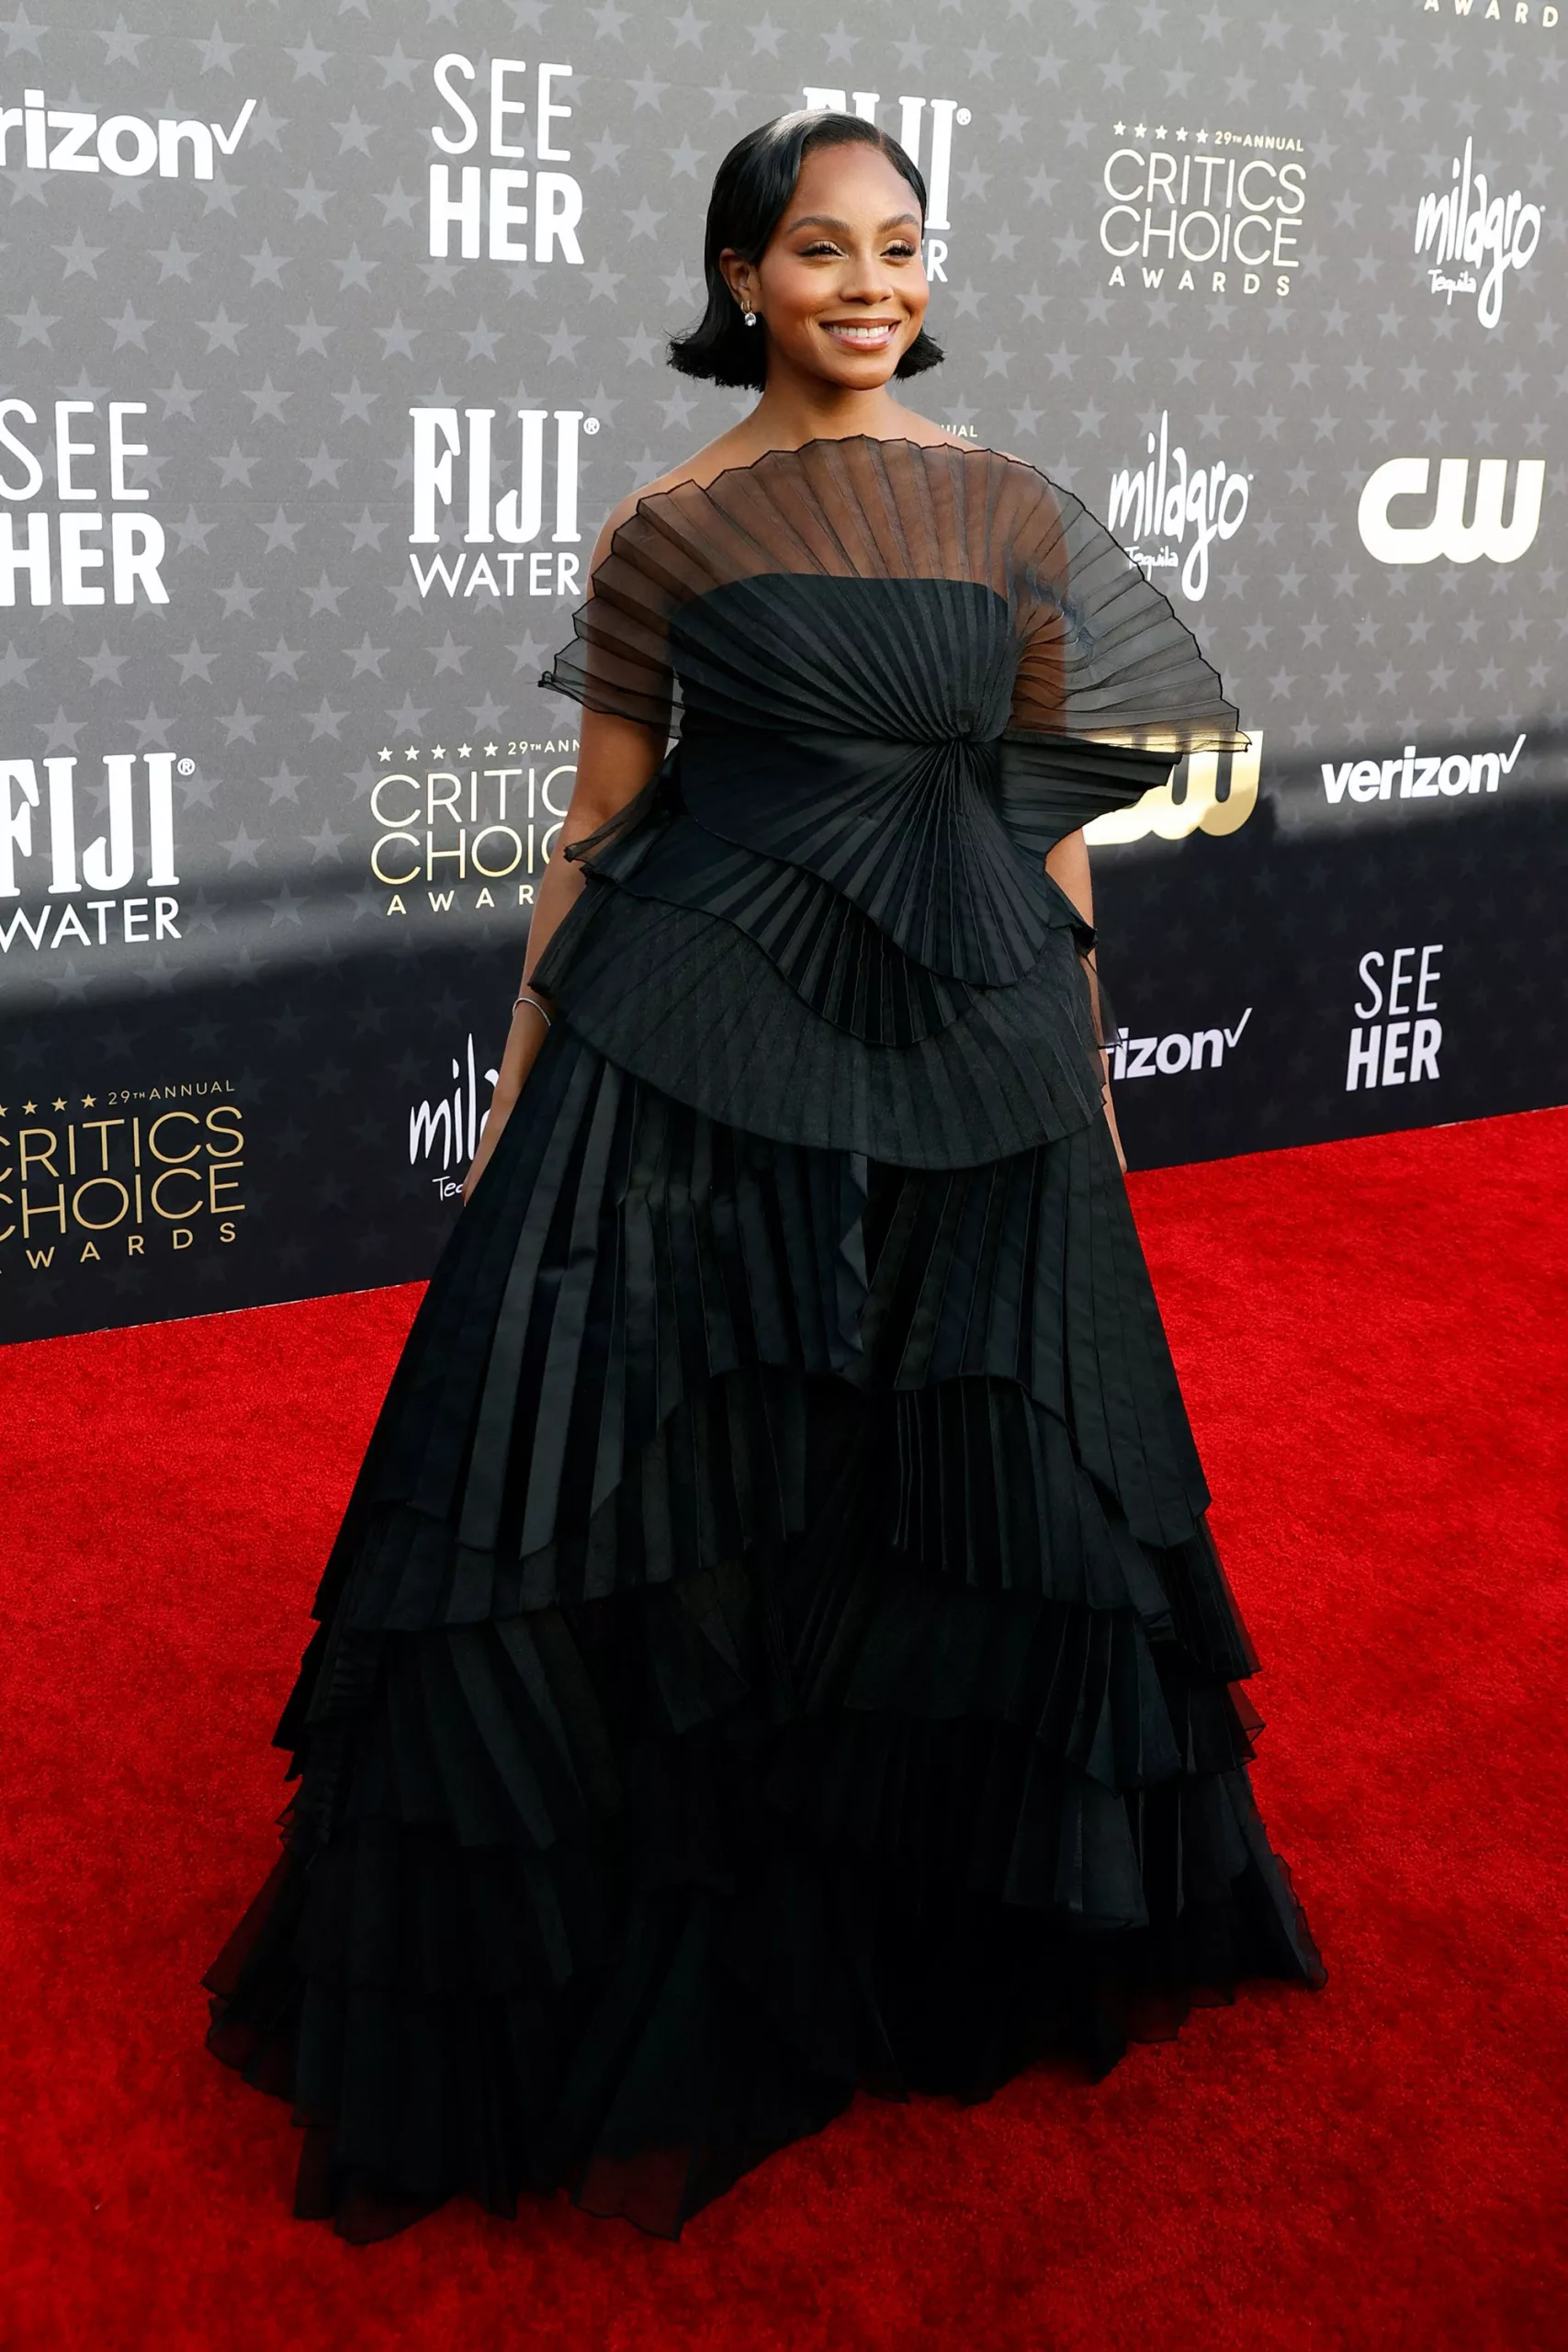 Actor Geffri Maya looked elegant in a ruffle floor-length gown by John Paul Ataker.